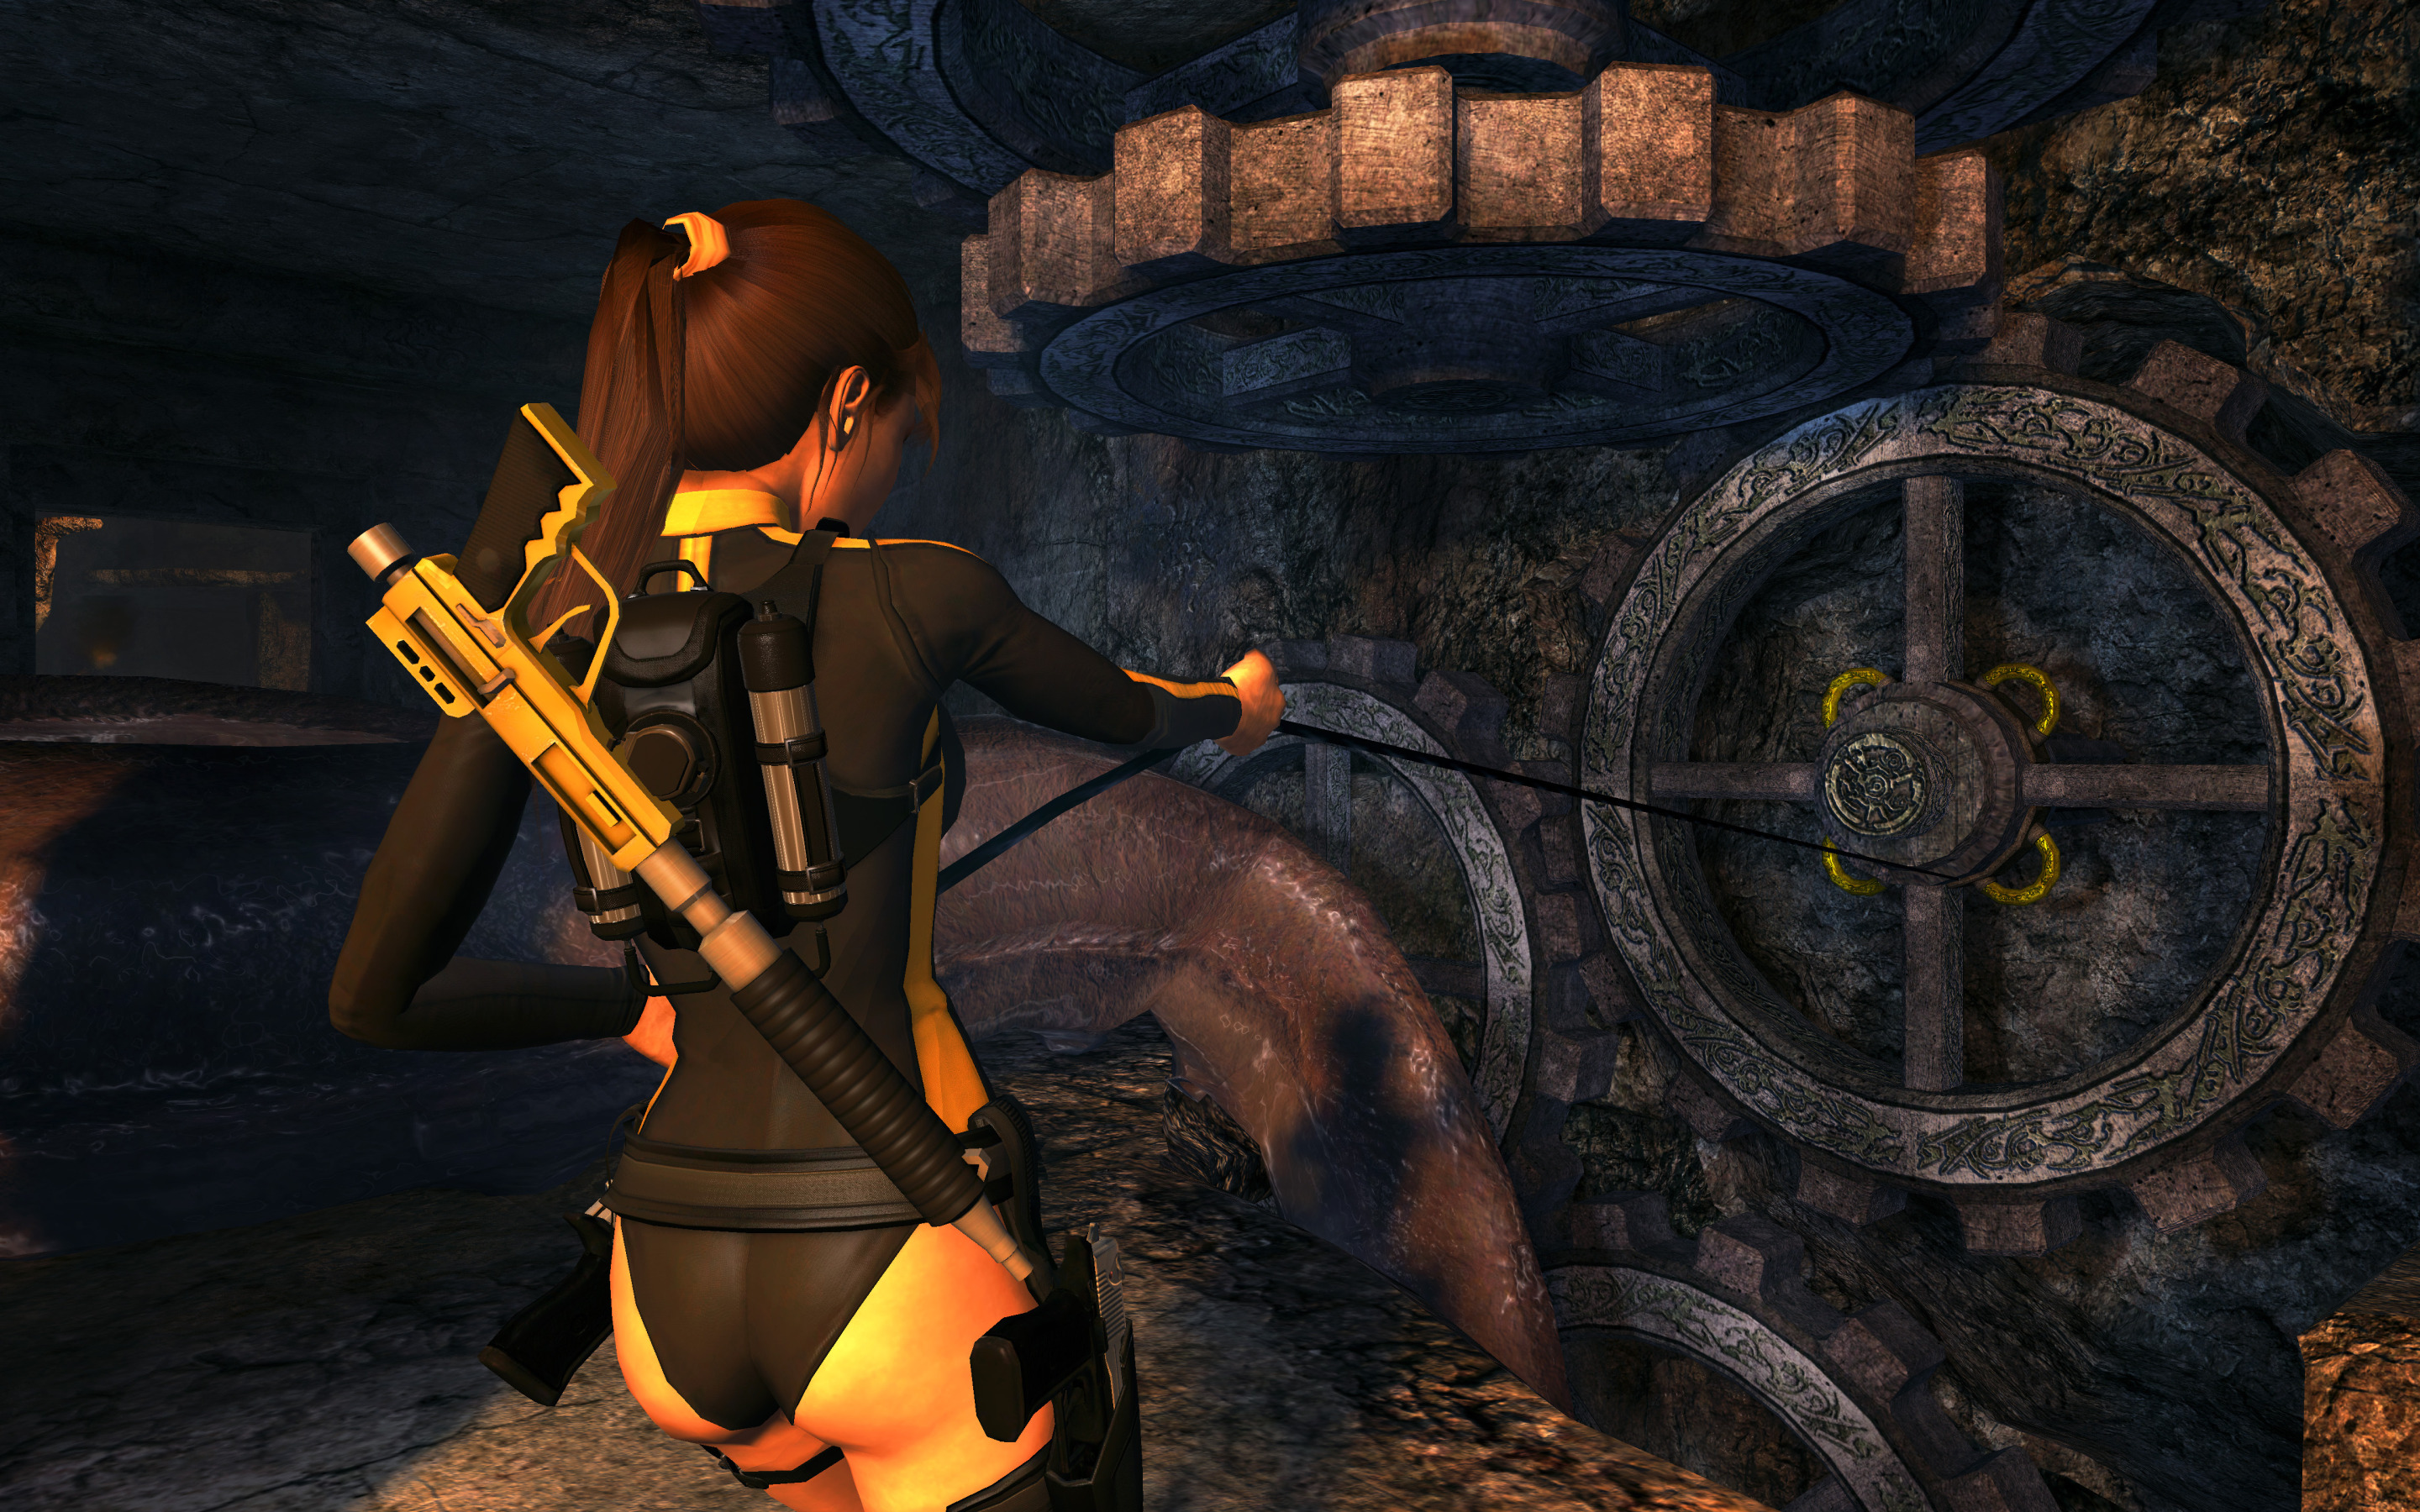 Обзор игр 18. Томб Райдер андерворлд. Игра Tomb Raider Underworld.